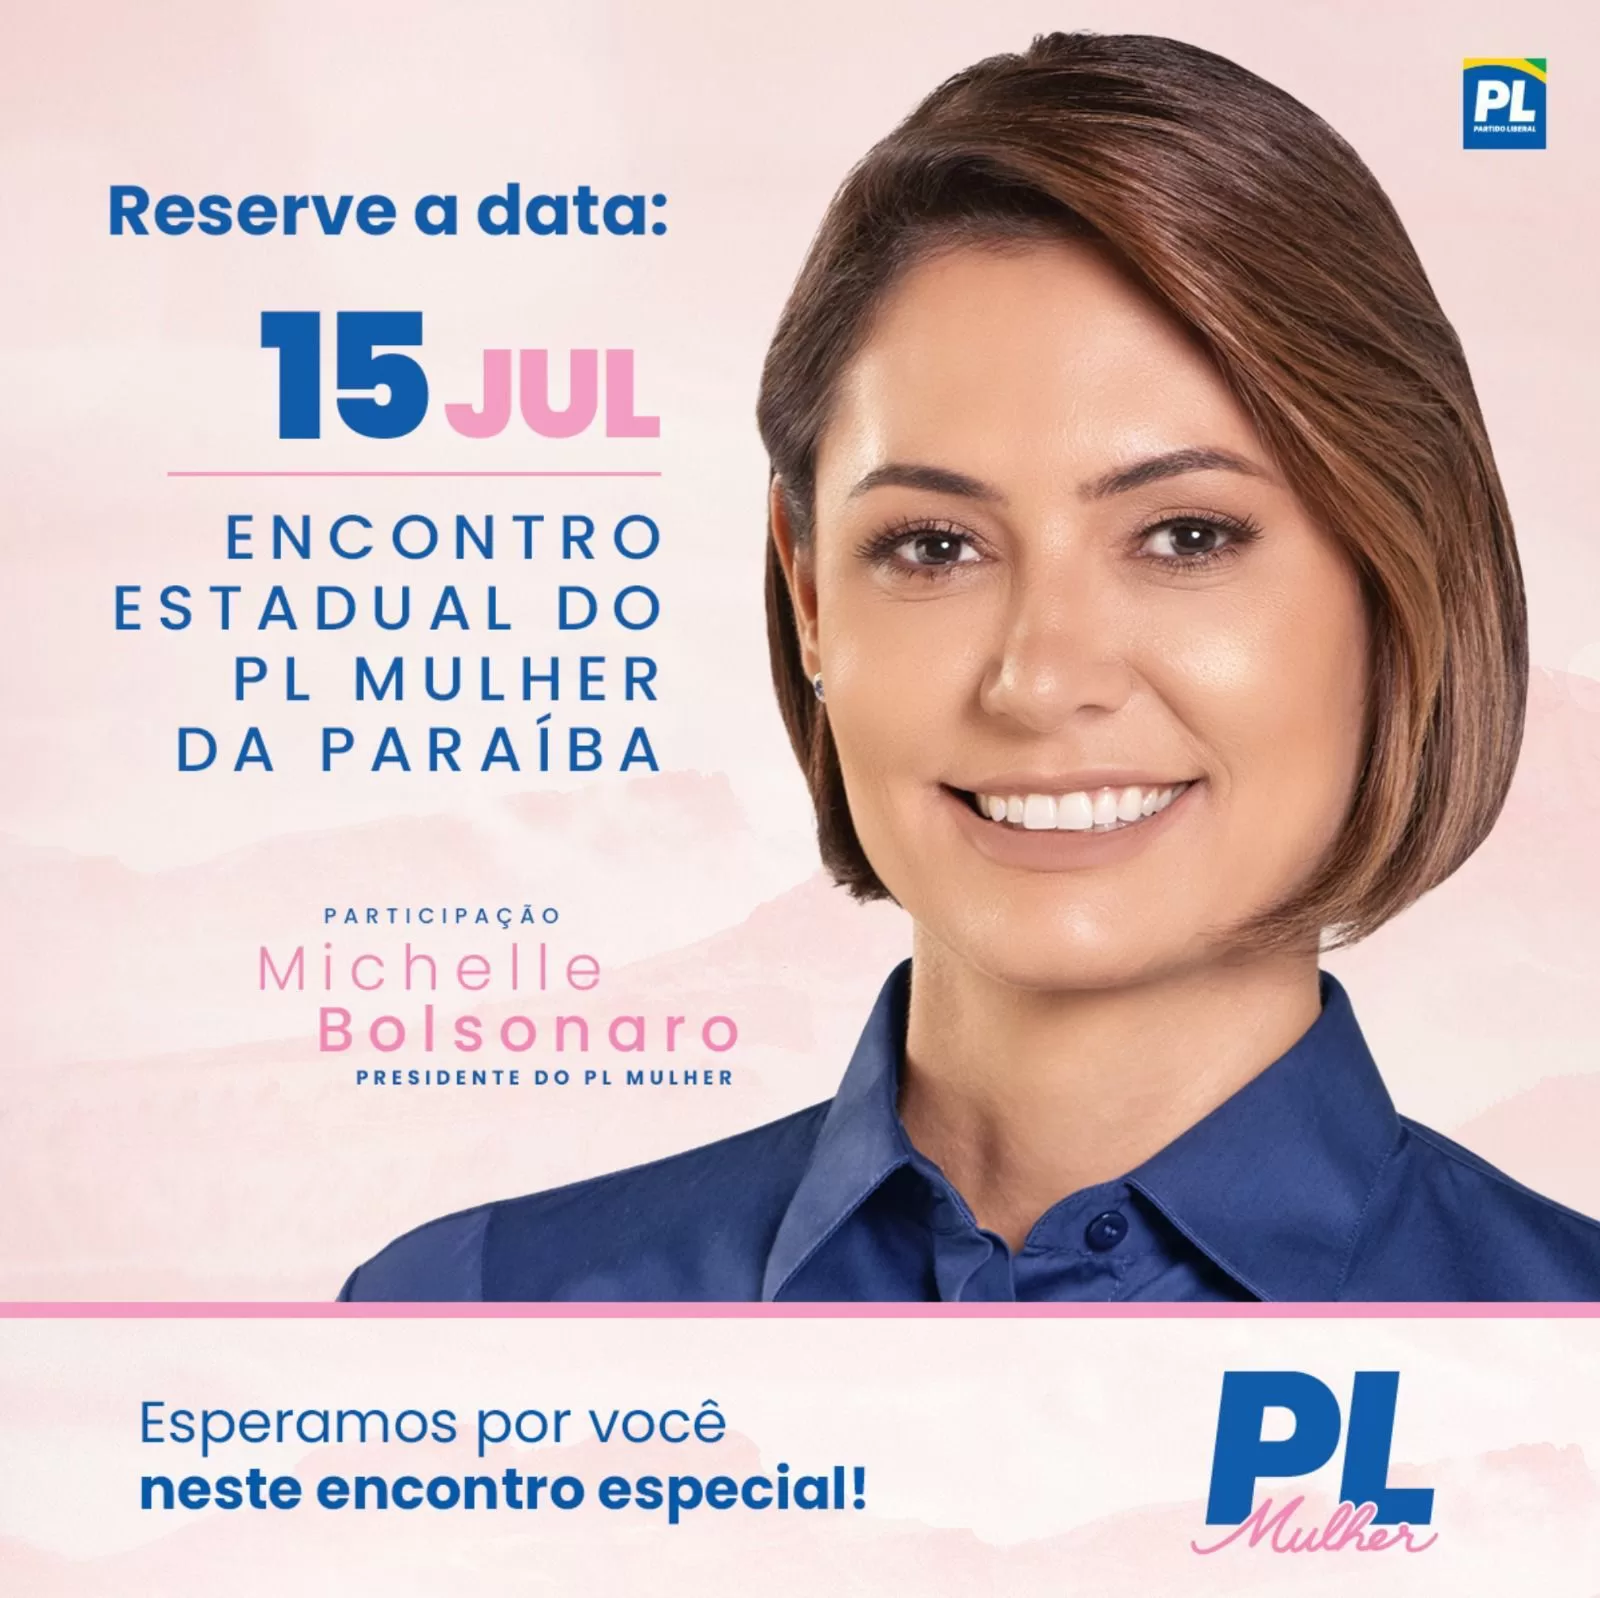 “Encontro Estadual do PL Mulher da Paraíba: Fortalecendo os Conservadores com a Presença de Michelle Bolsonaro”